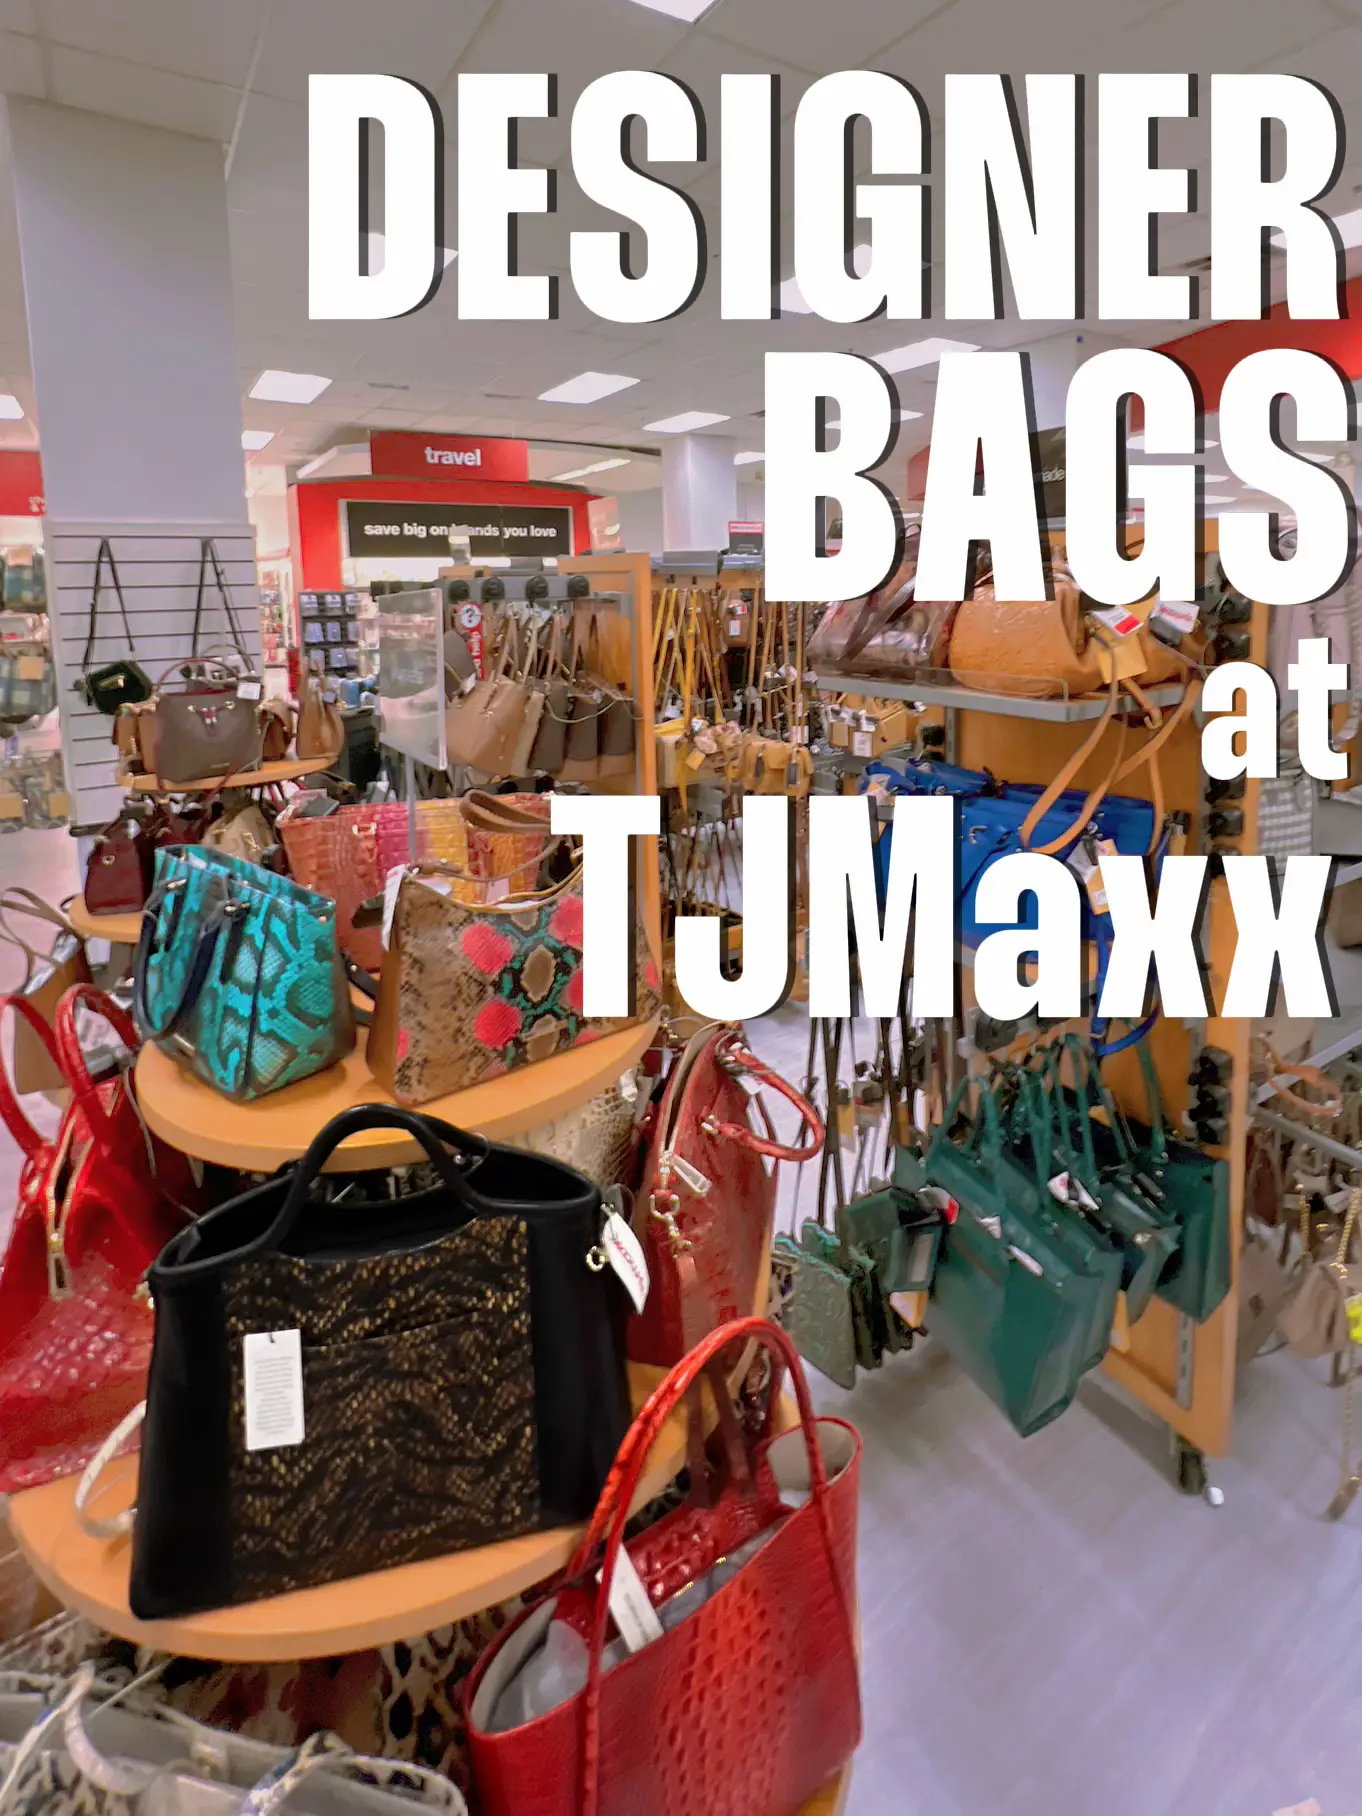 Designer Handbags At T J Maxx: Michael Kors Coach And More